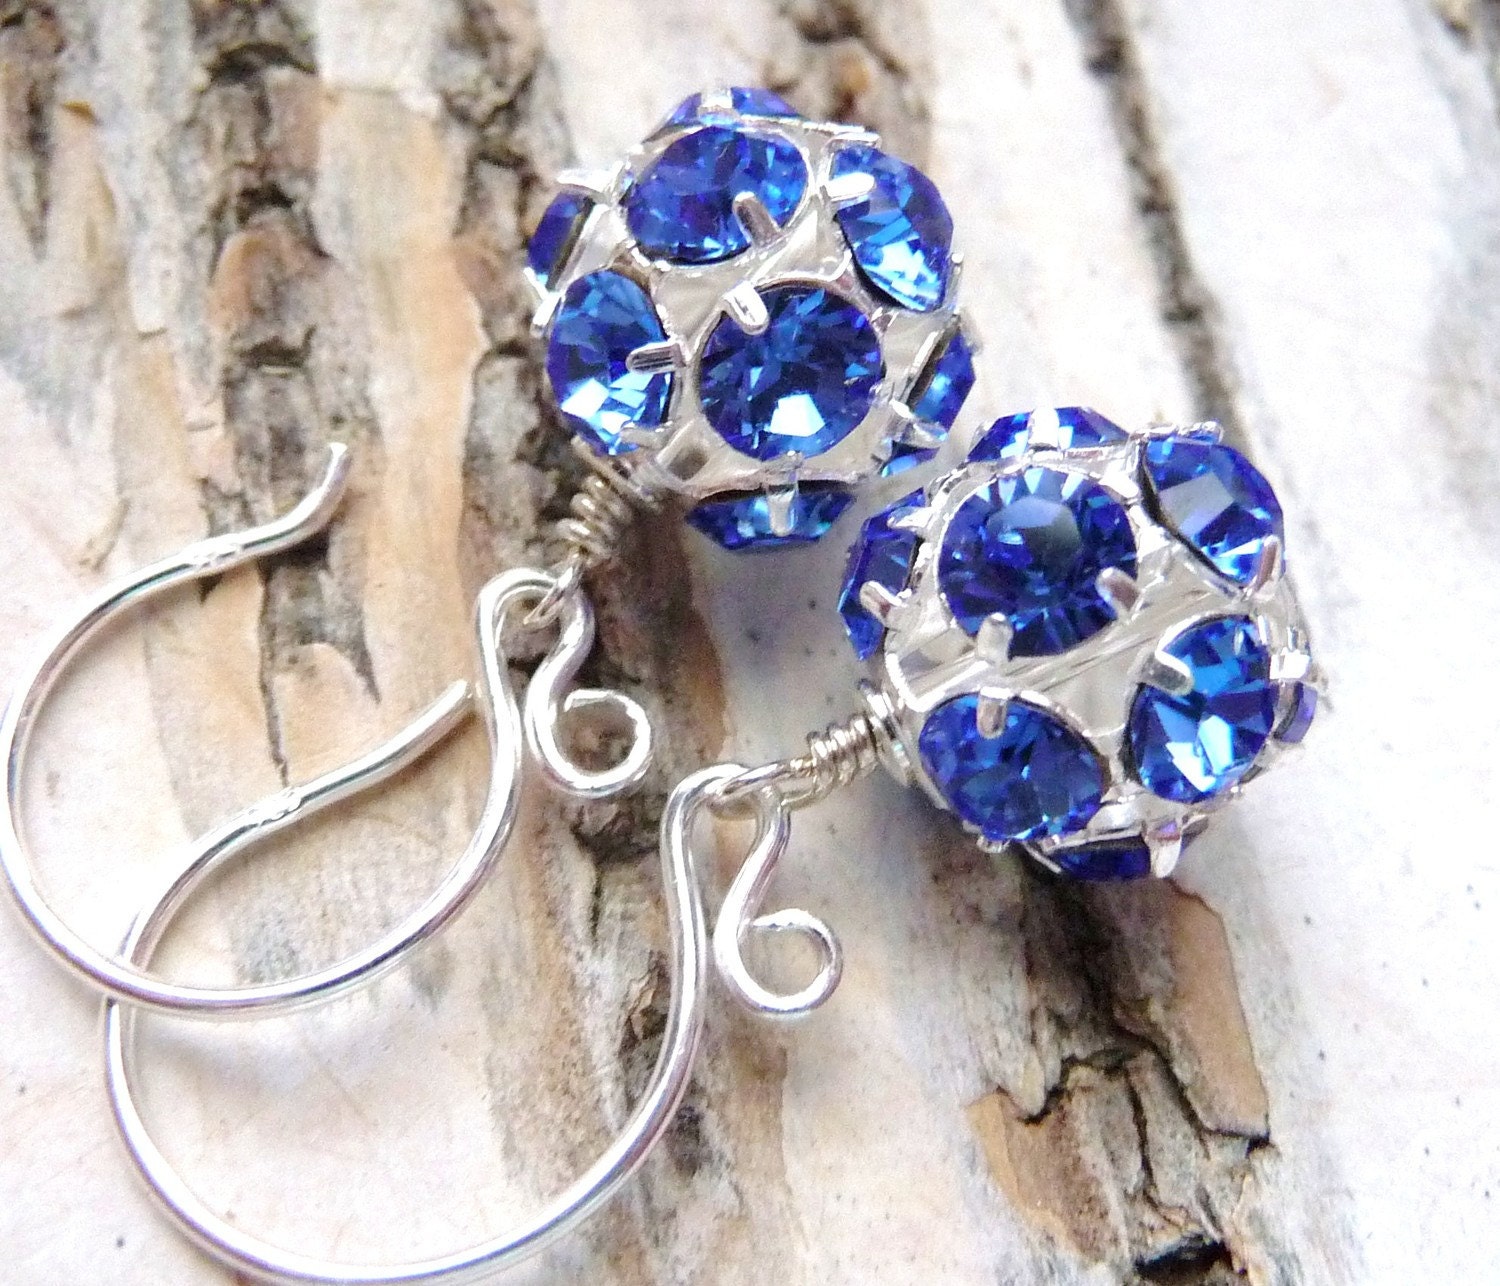 Blue Rhinestone Earrings, Sapphire Blue Swarovski Crystals, Sterling Silver Earrings, Fashion Under 25 - JBMDesigns